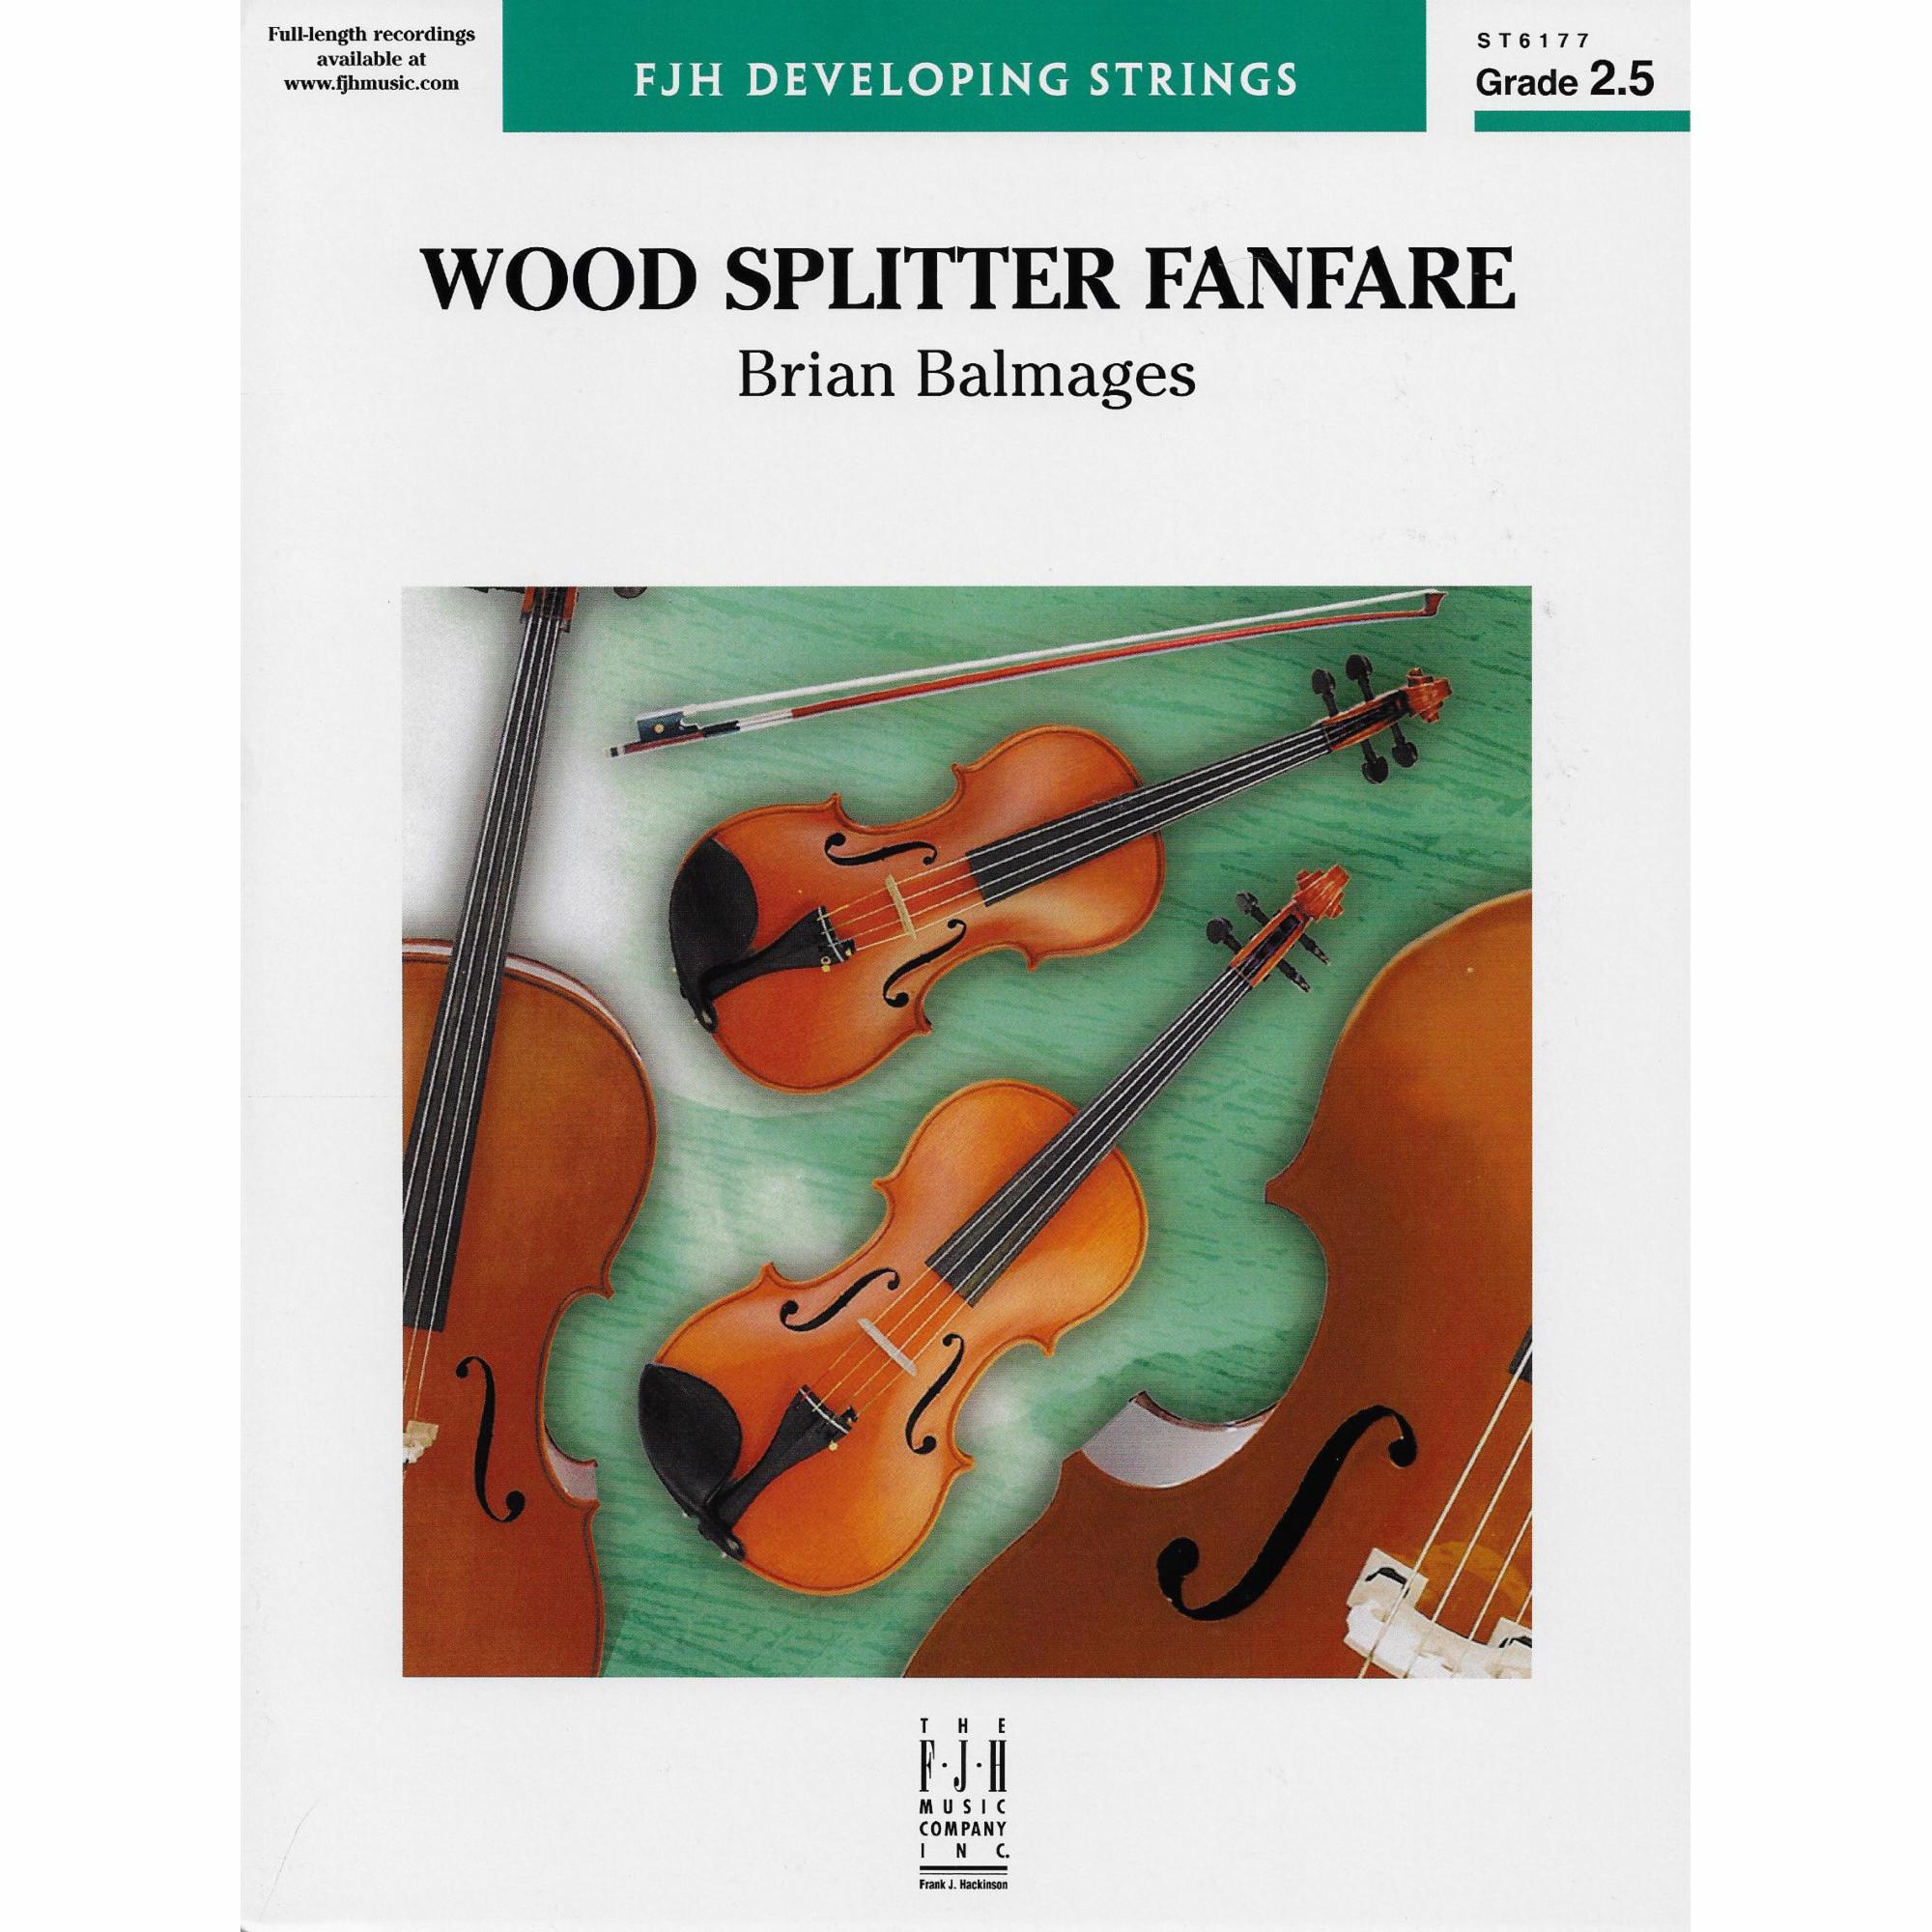 Wood Splitter Fanfare for String Orchestra